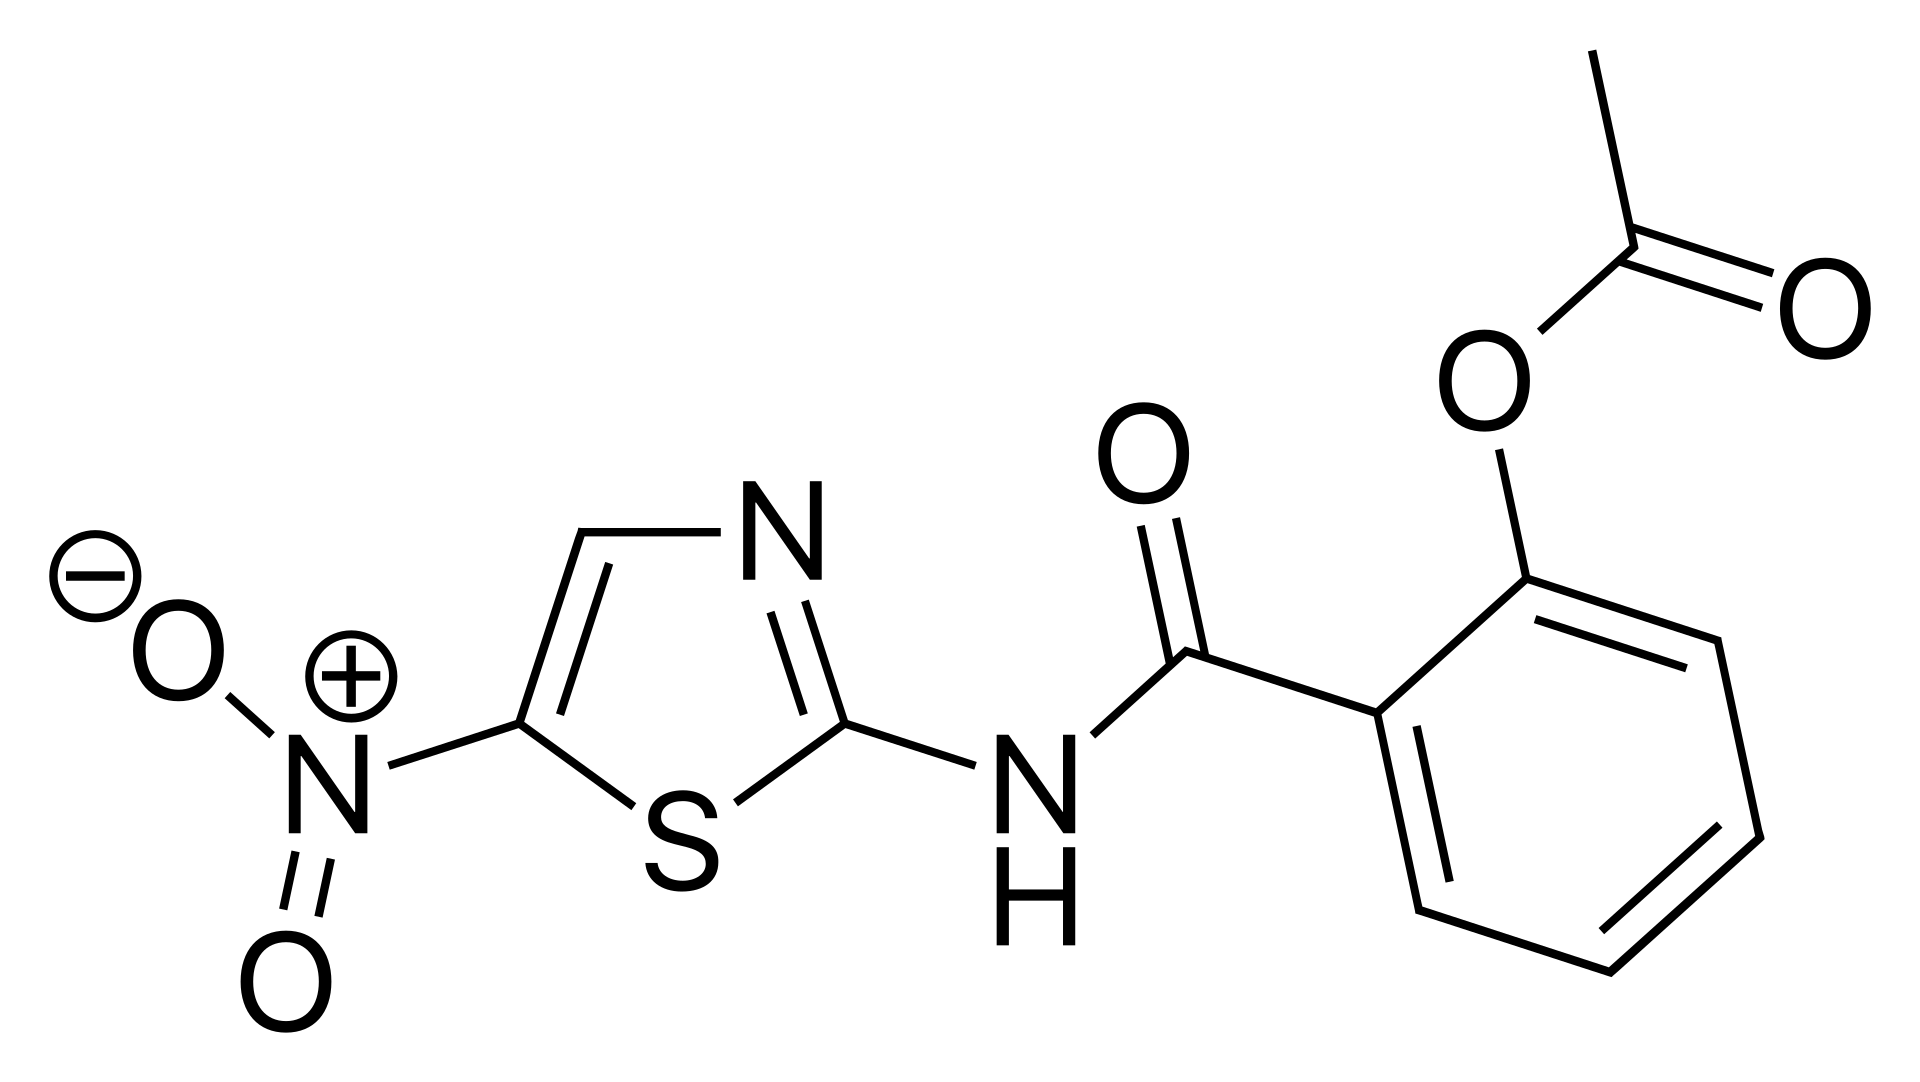 Estrutura química de Nitazoxanida